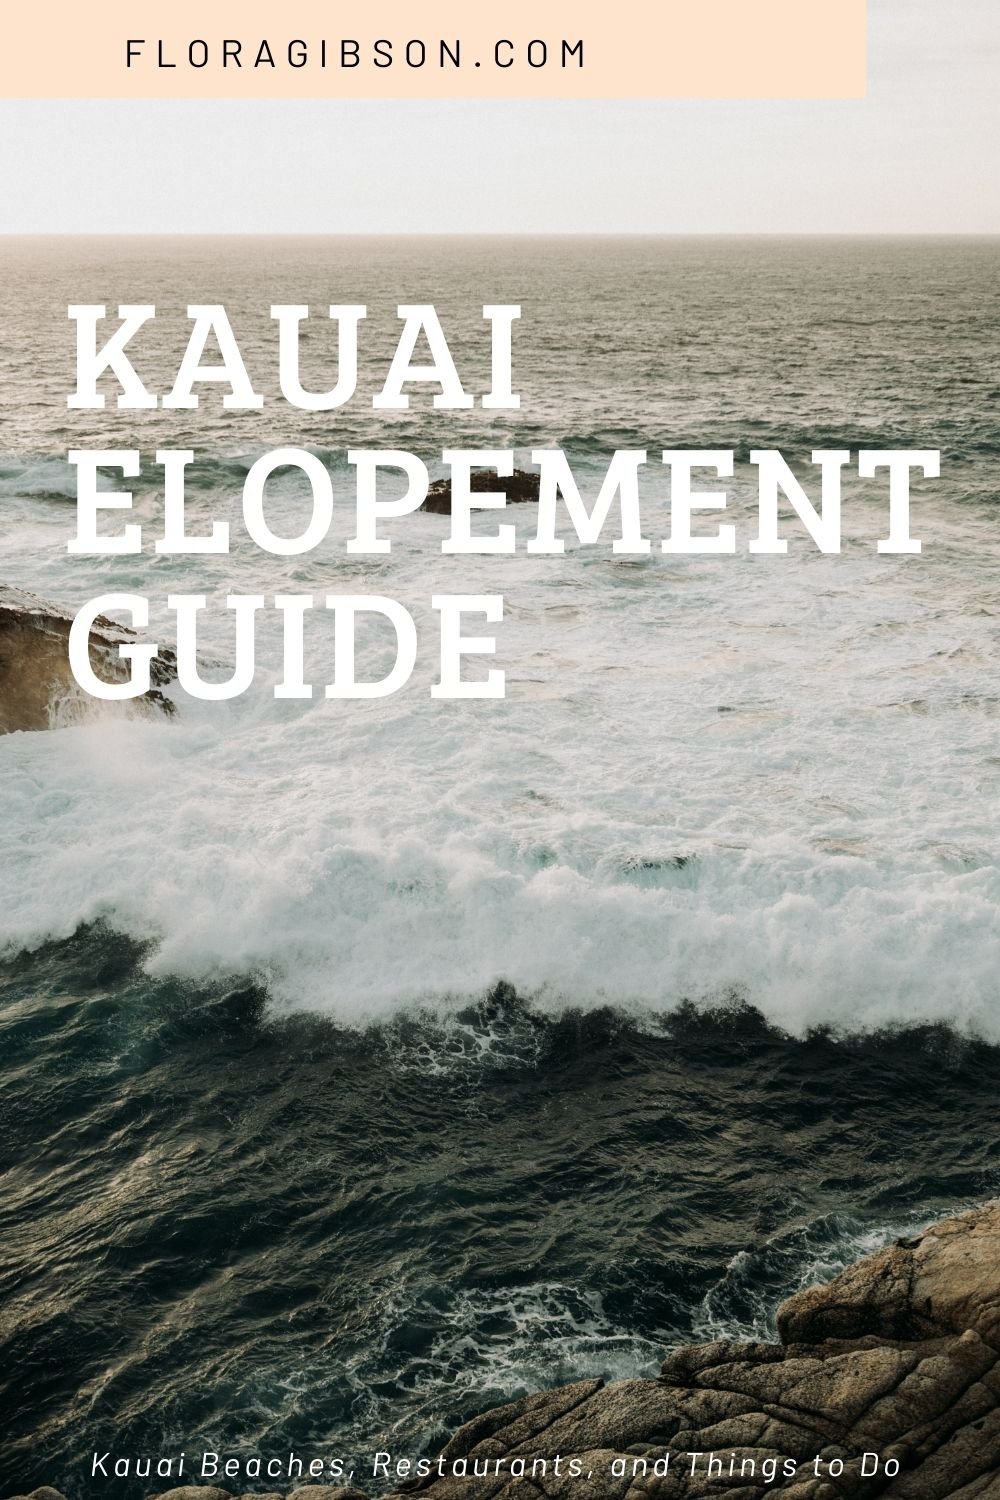 Kauai Elopement Guide.jpg